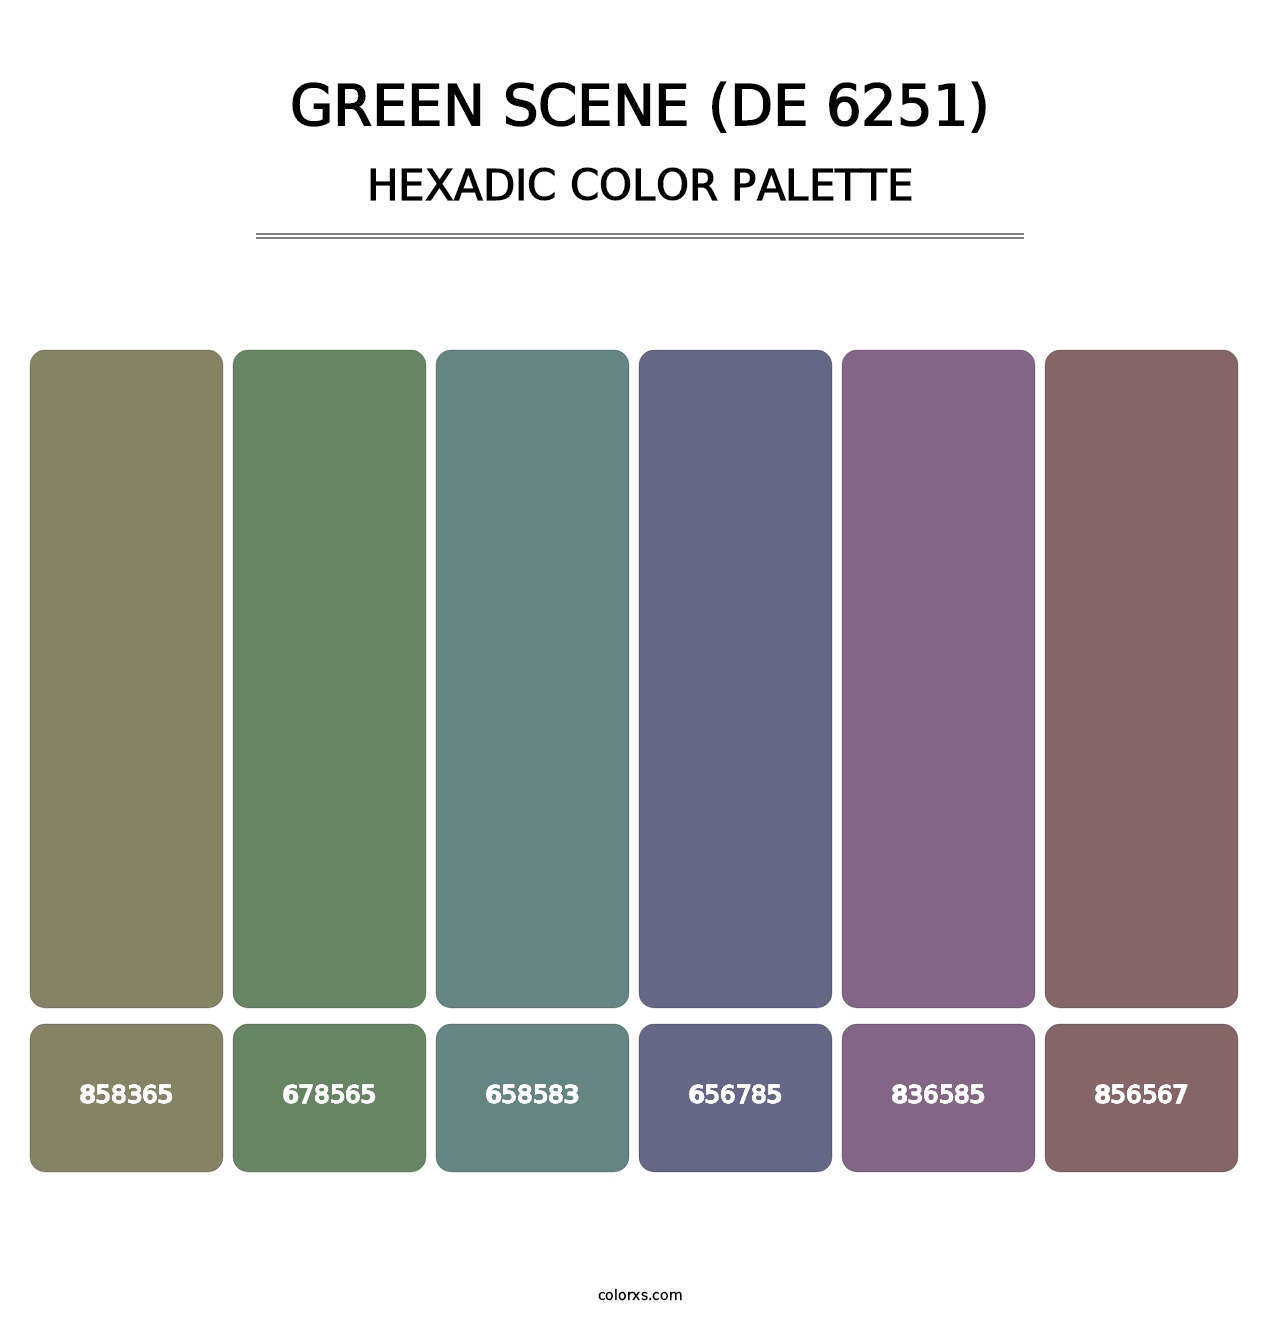 Green Scene (DE 6251) - Hexadic Color Palette